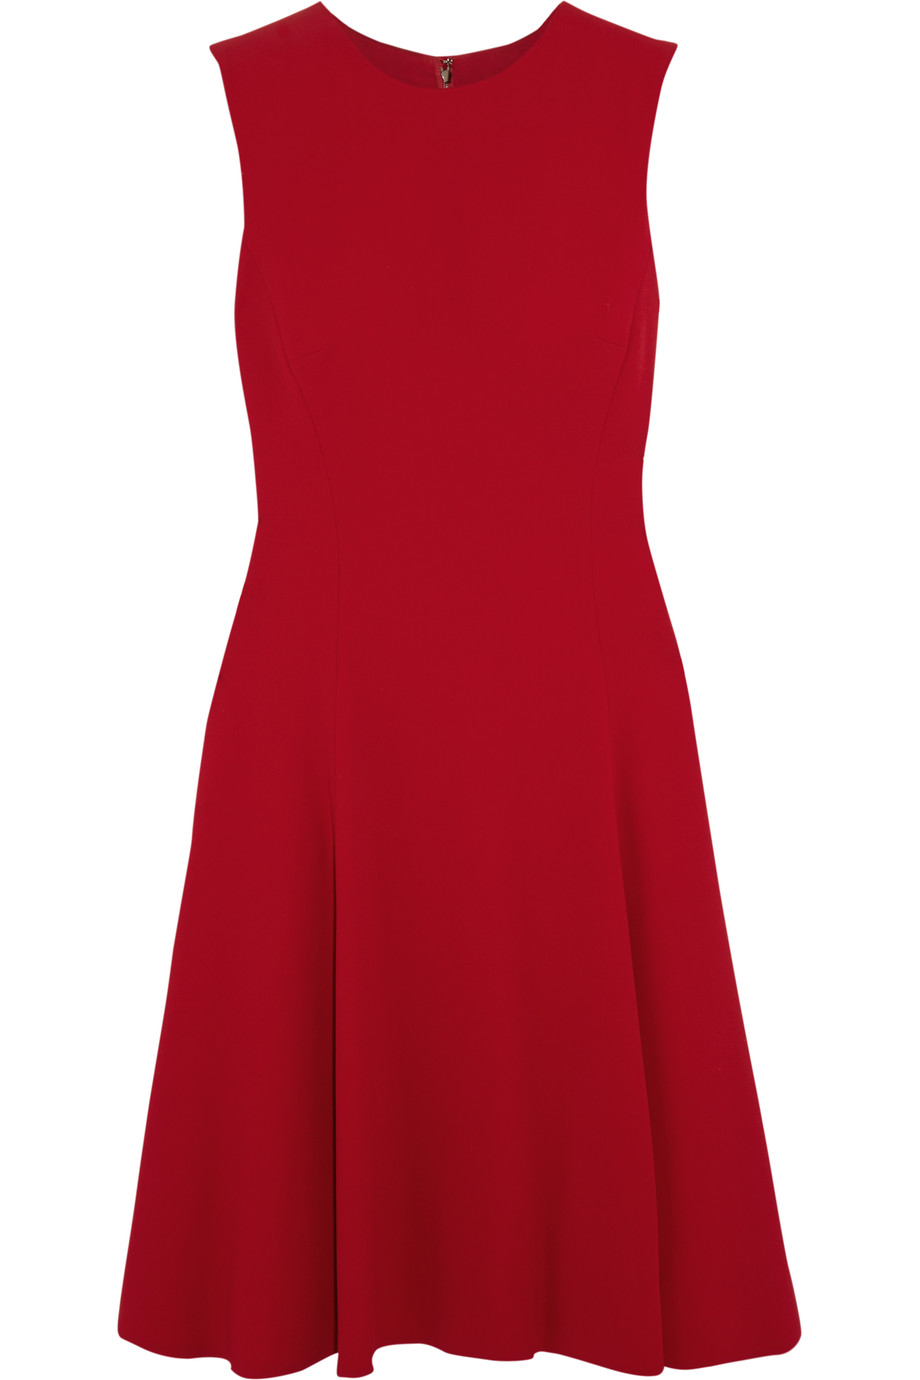 Dolce & Gabbana Stretch-crepe Dress | ModeSens